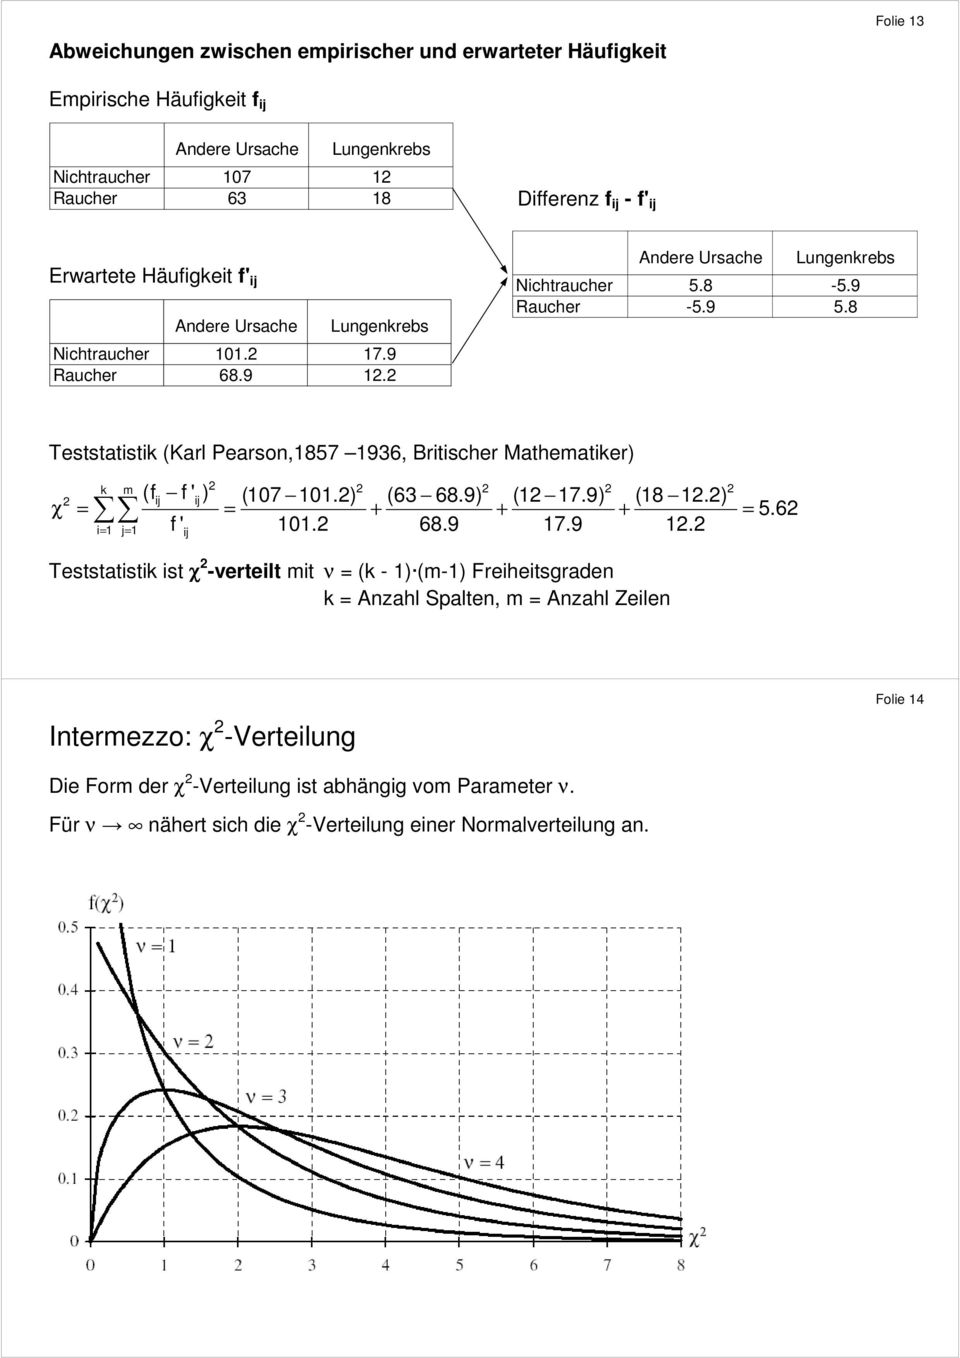 8 Teststatistik (Karl Pearson,1857 1936, Britischer Mathematiker) k m 2 2 2 2 2 2 ij ij χ = = + + + = i= 1 j= 1 (f f ' ) (107 101.2) (63 68.9) (12 17.9) (18 12.2) f ' 101.2 68.9 17.9 12.